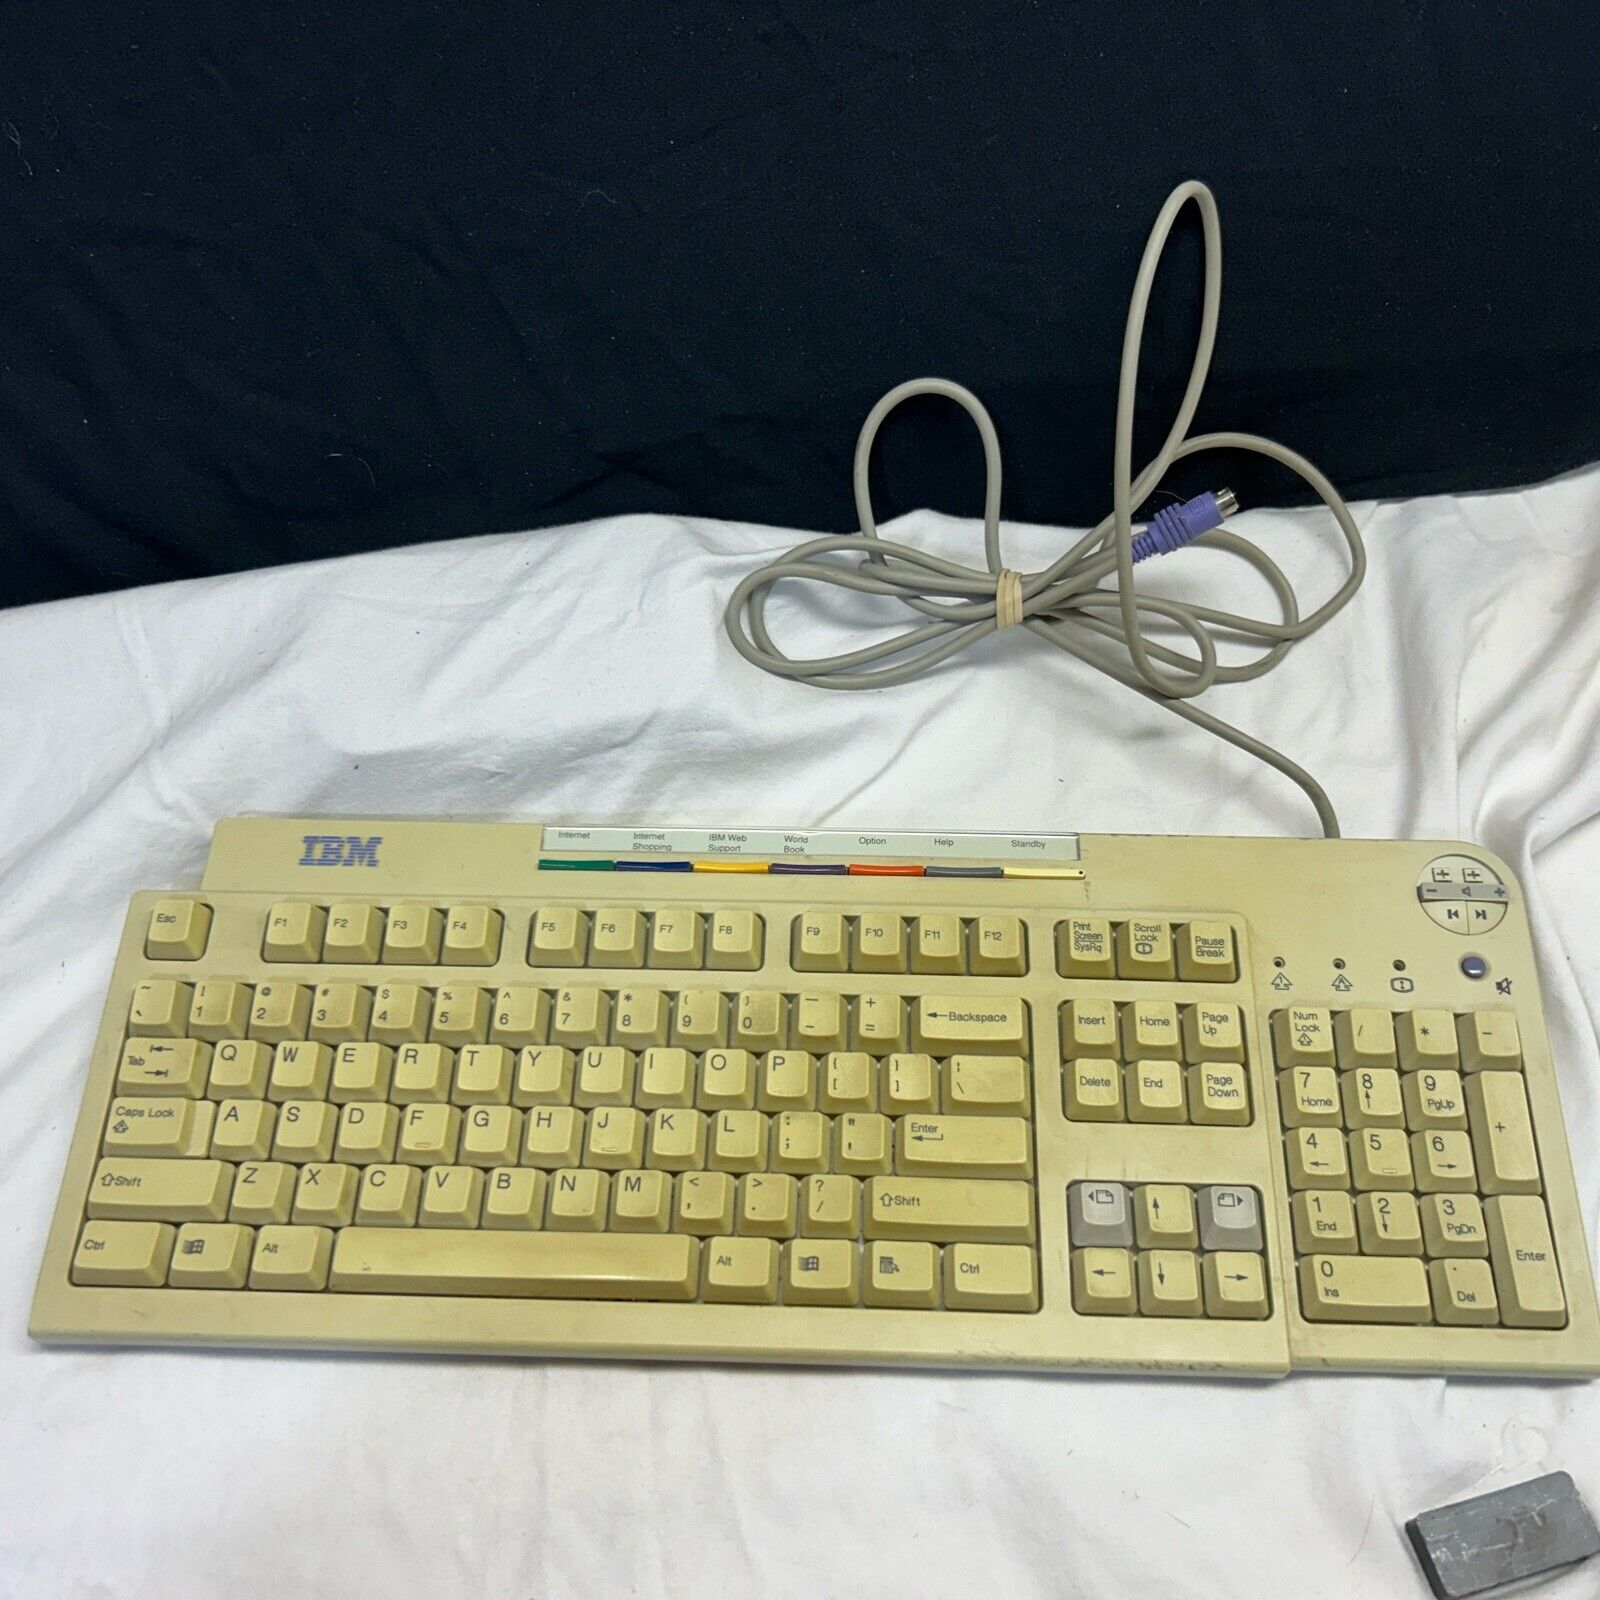 IBM KB-9930 vintage white PS/2 multimedia keyboard internet/media controls